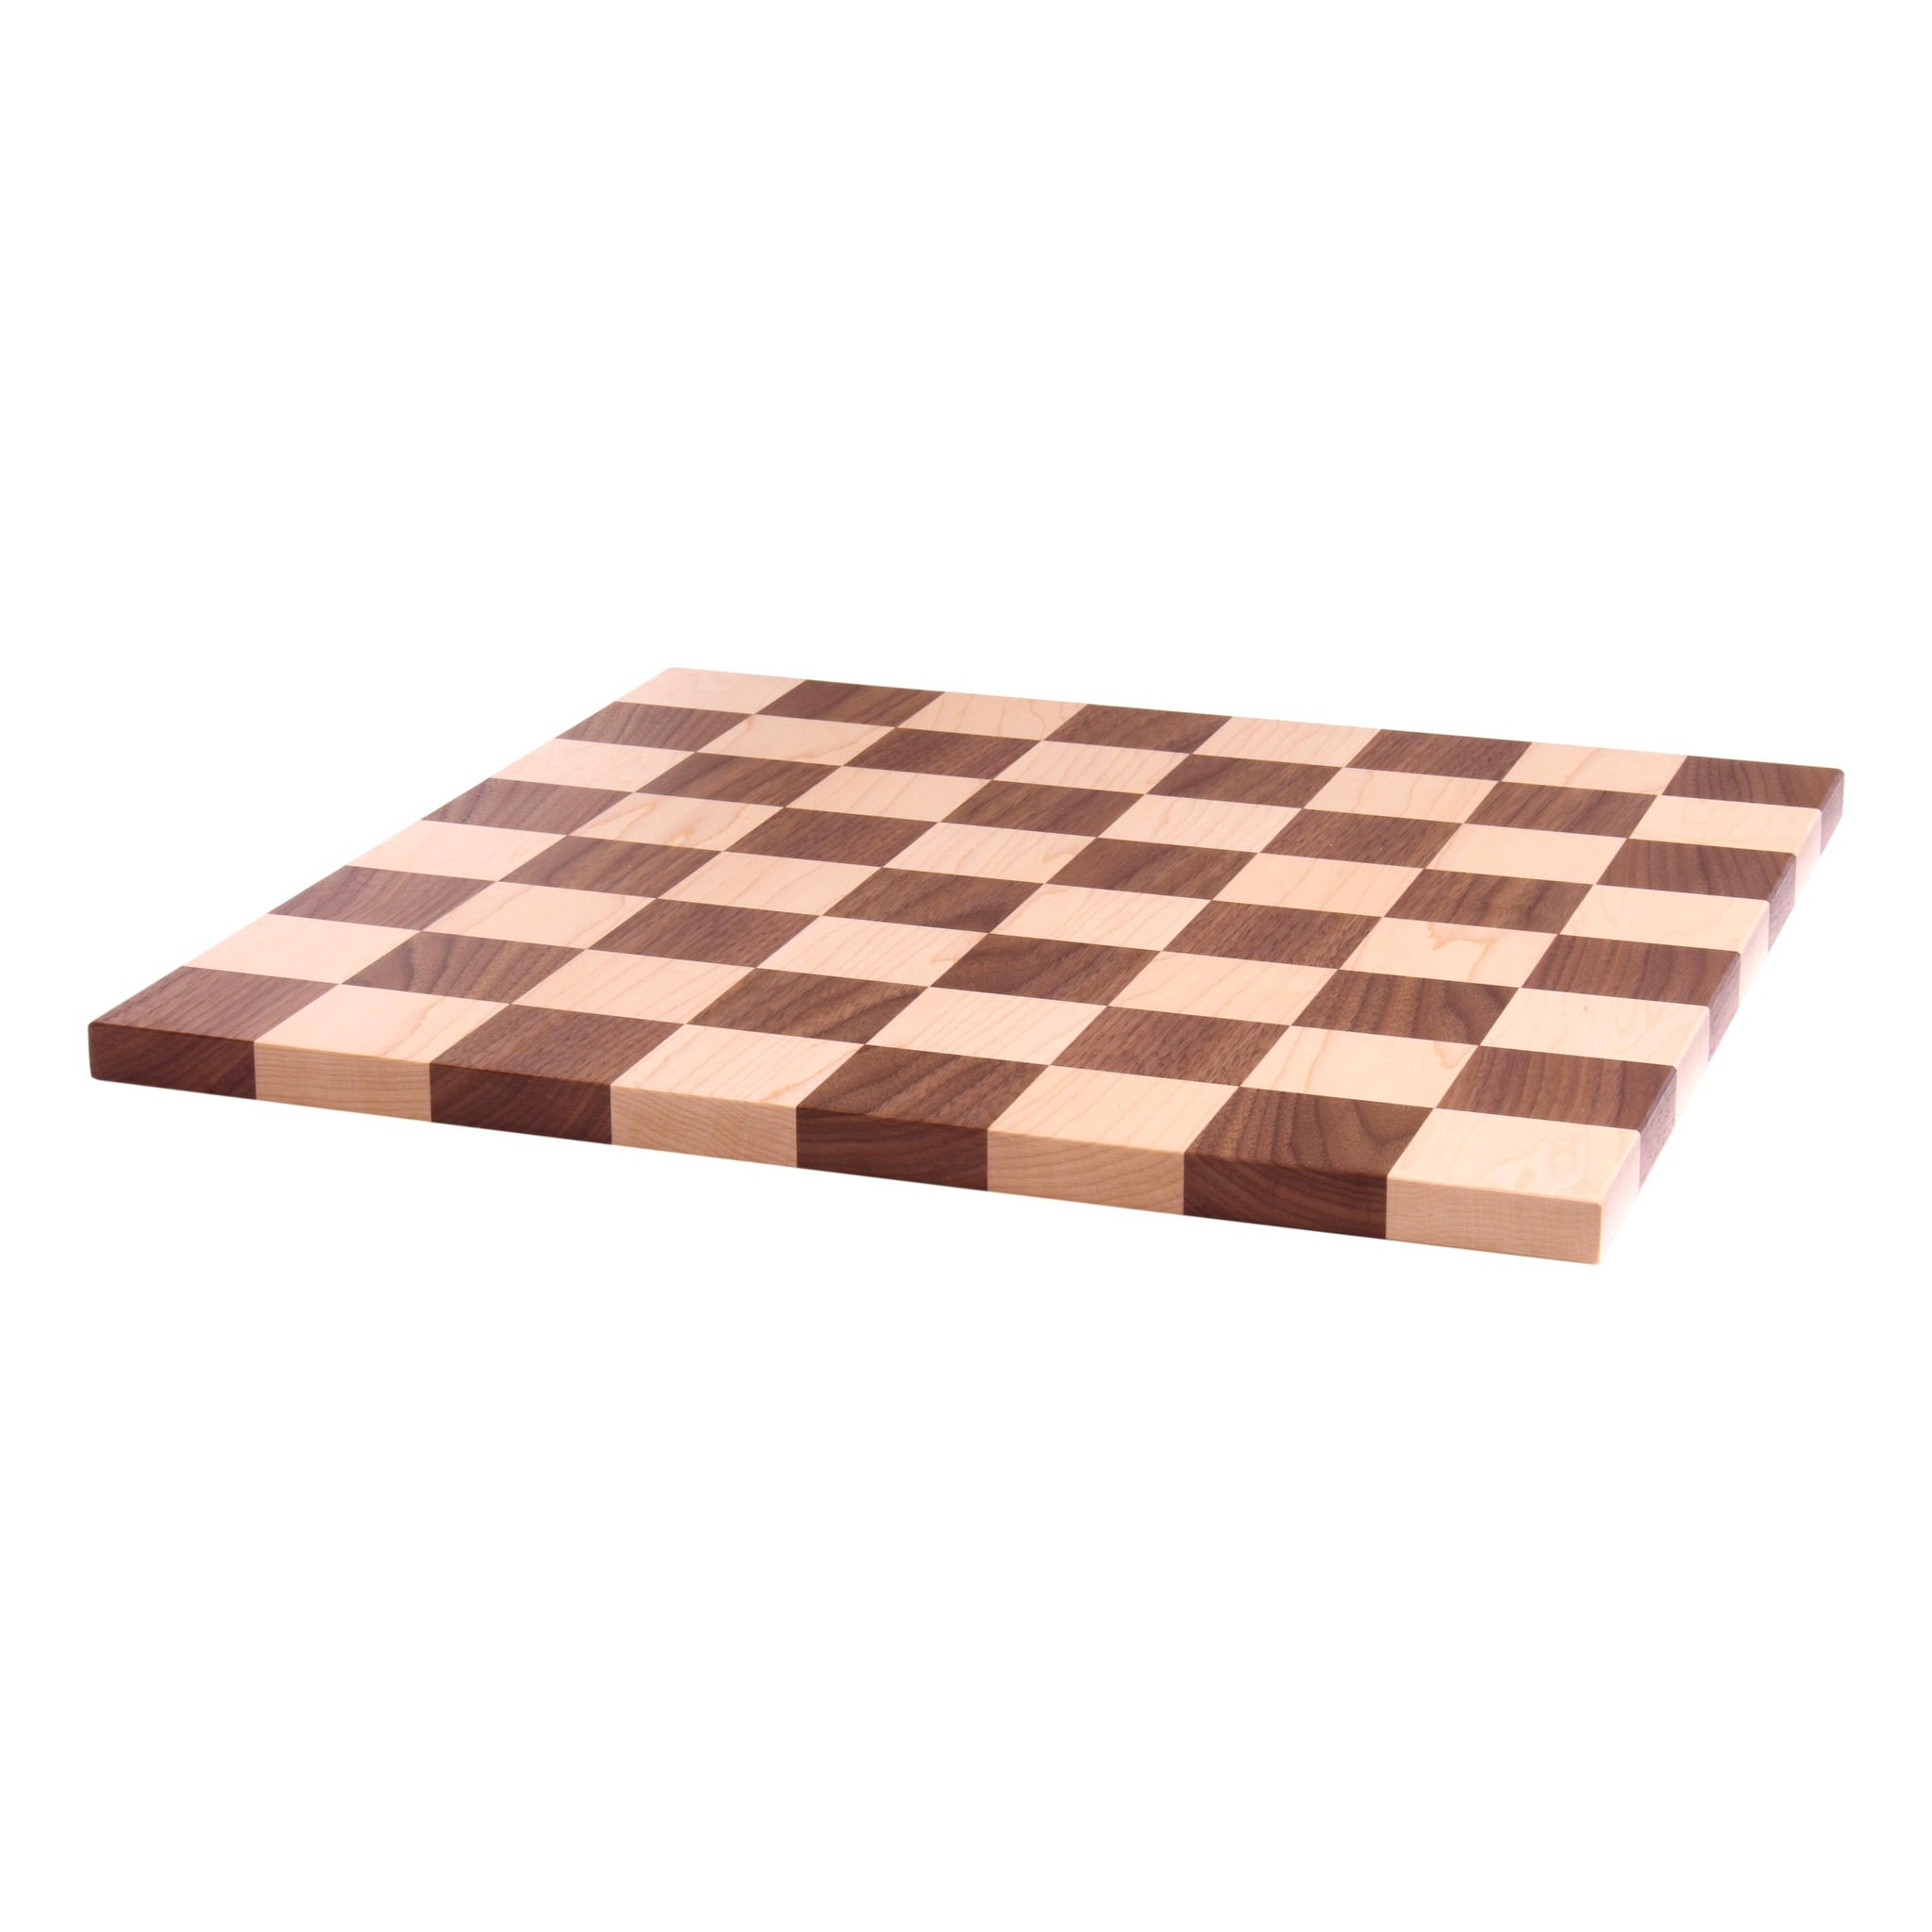 18 Standard Walnut Chess Board